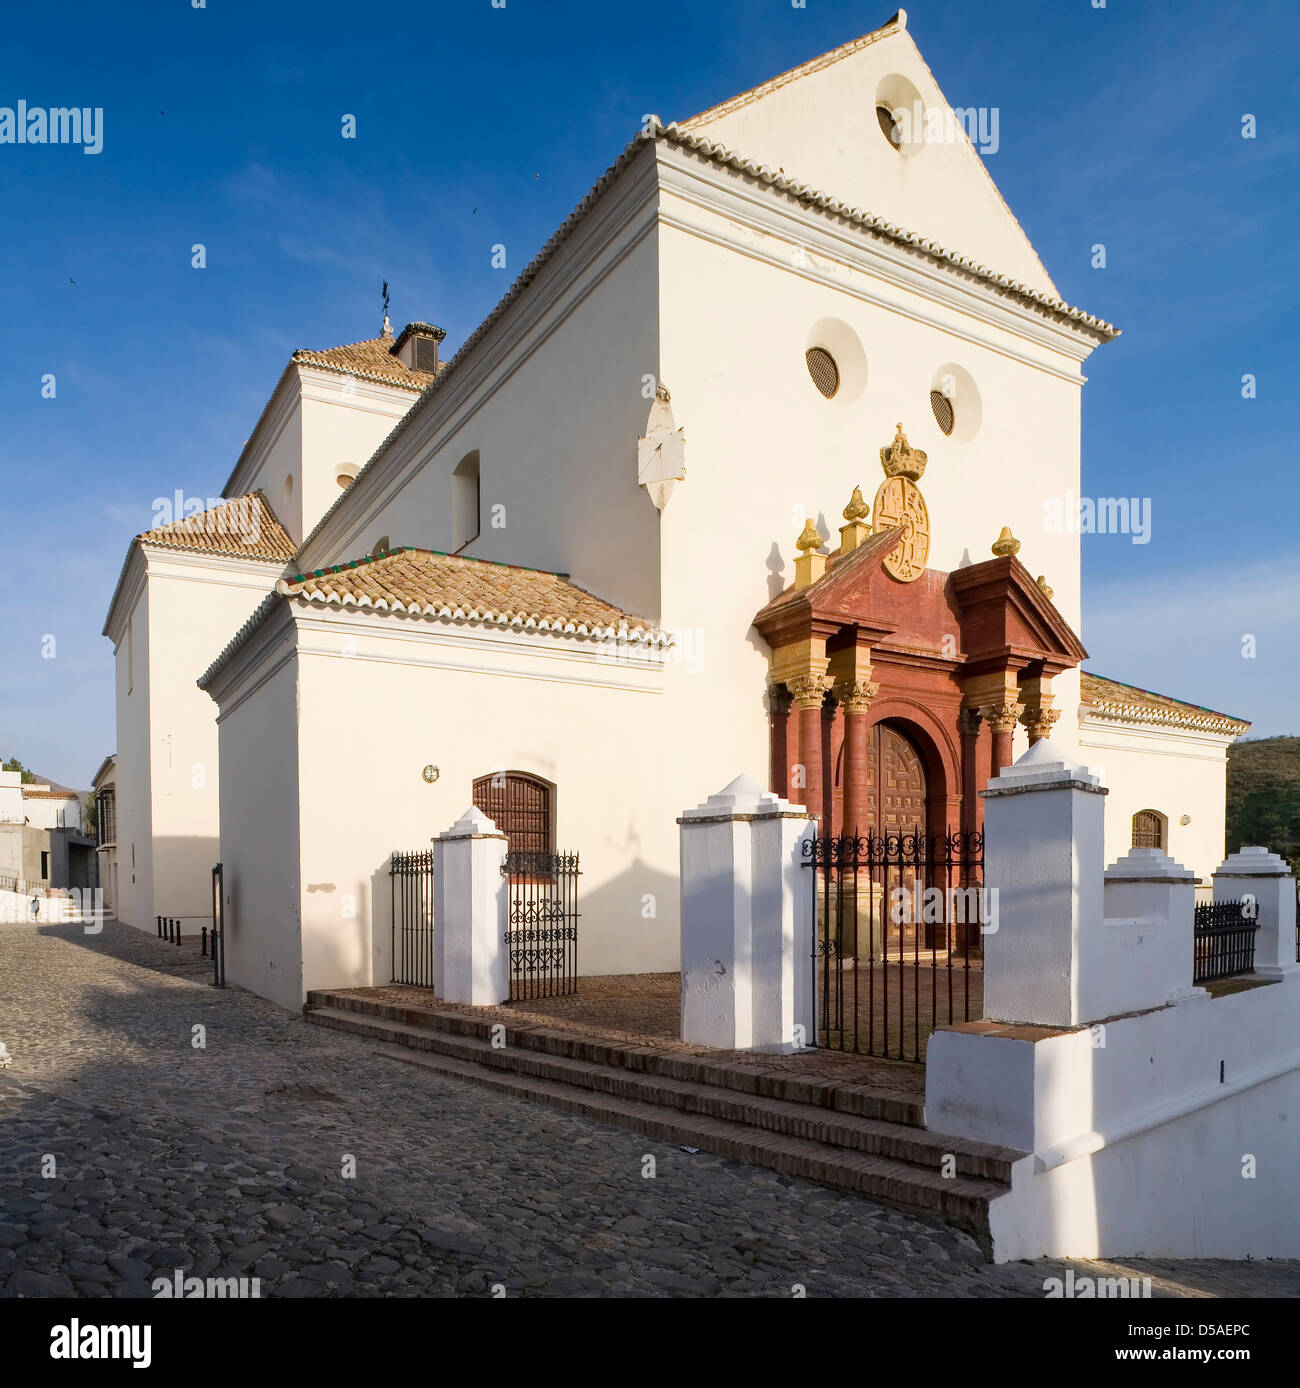 MACHARAVIAYA. SAN JACINTO CHURCH, MALAGA SPAIN Stock Photo